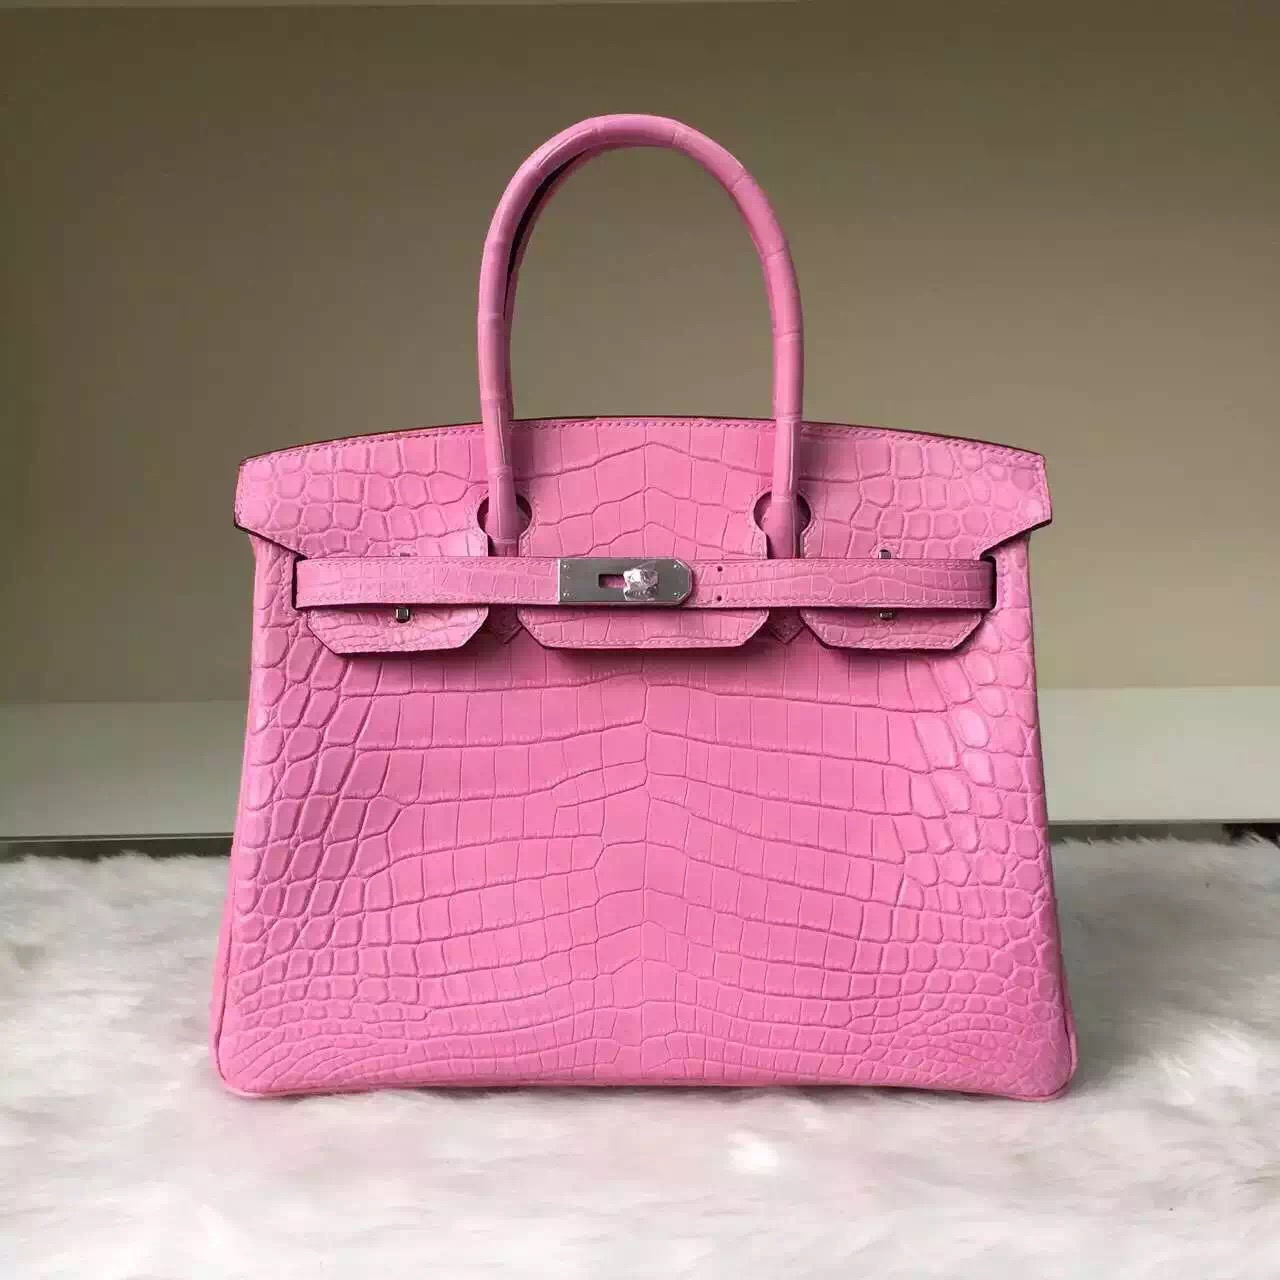 Online Store Hermes Matt Crocodile Leather Birkin30 Bag in Sakura Pink — Hermes Crocodile Birkin Bag